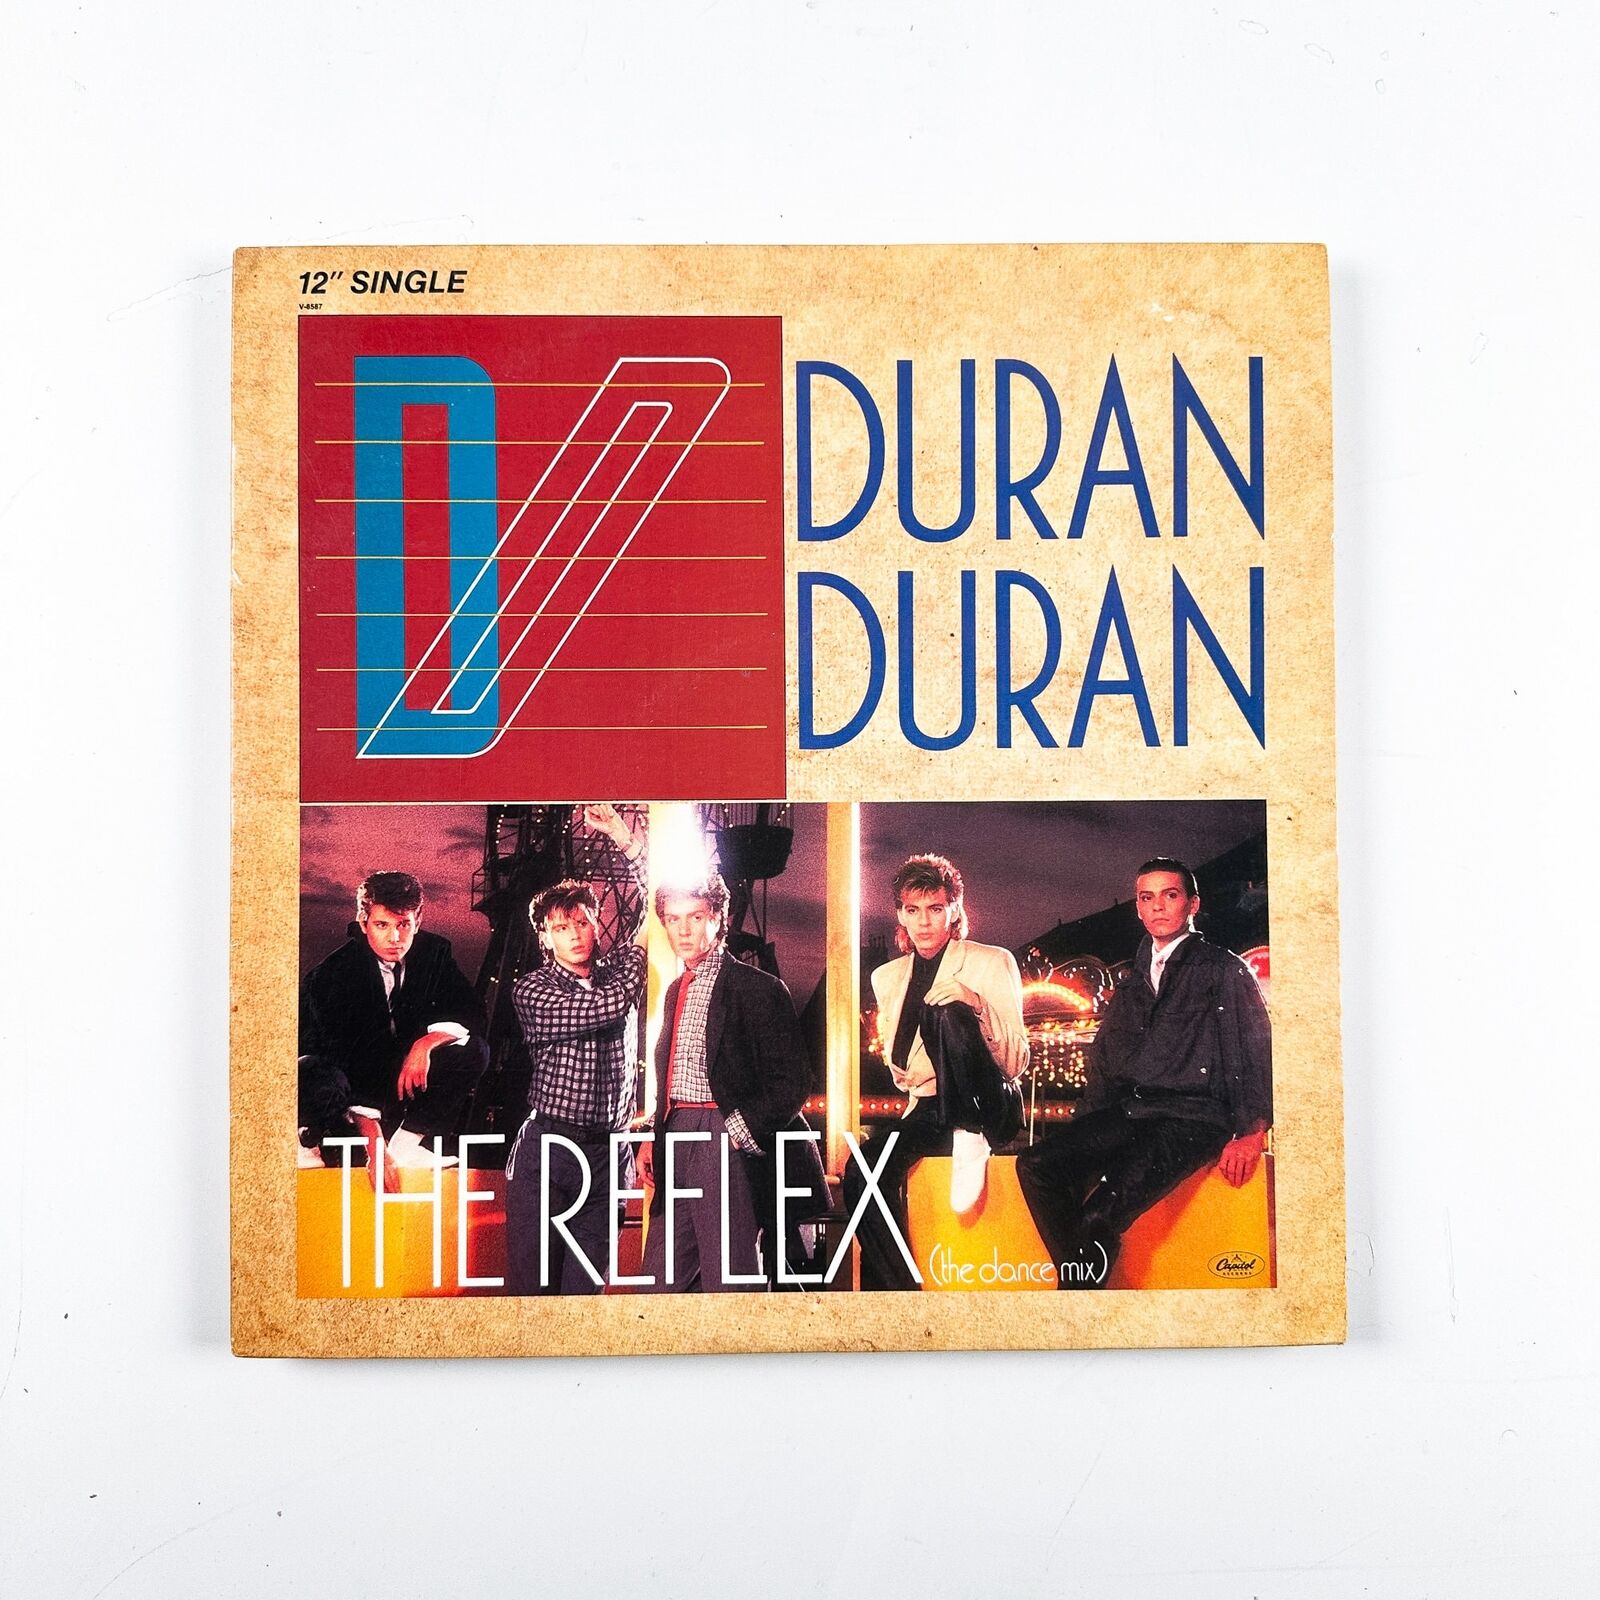 Duran Duran – The Reflex (The Dance Mix) – Vinyl LP Record – 1984